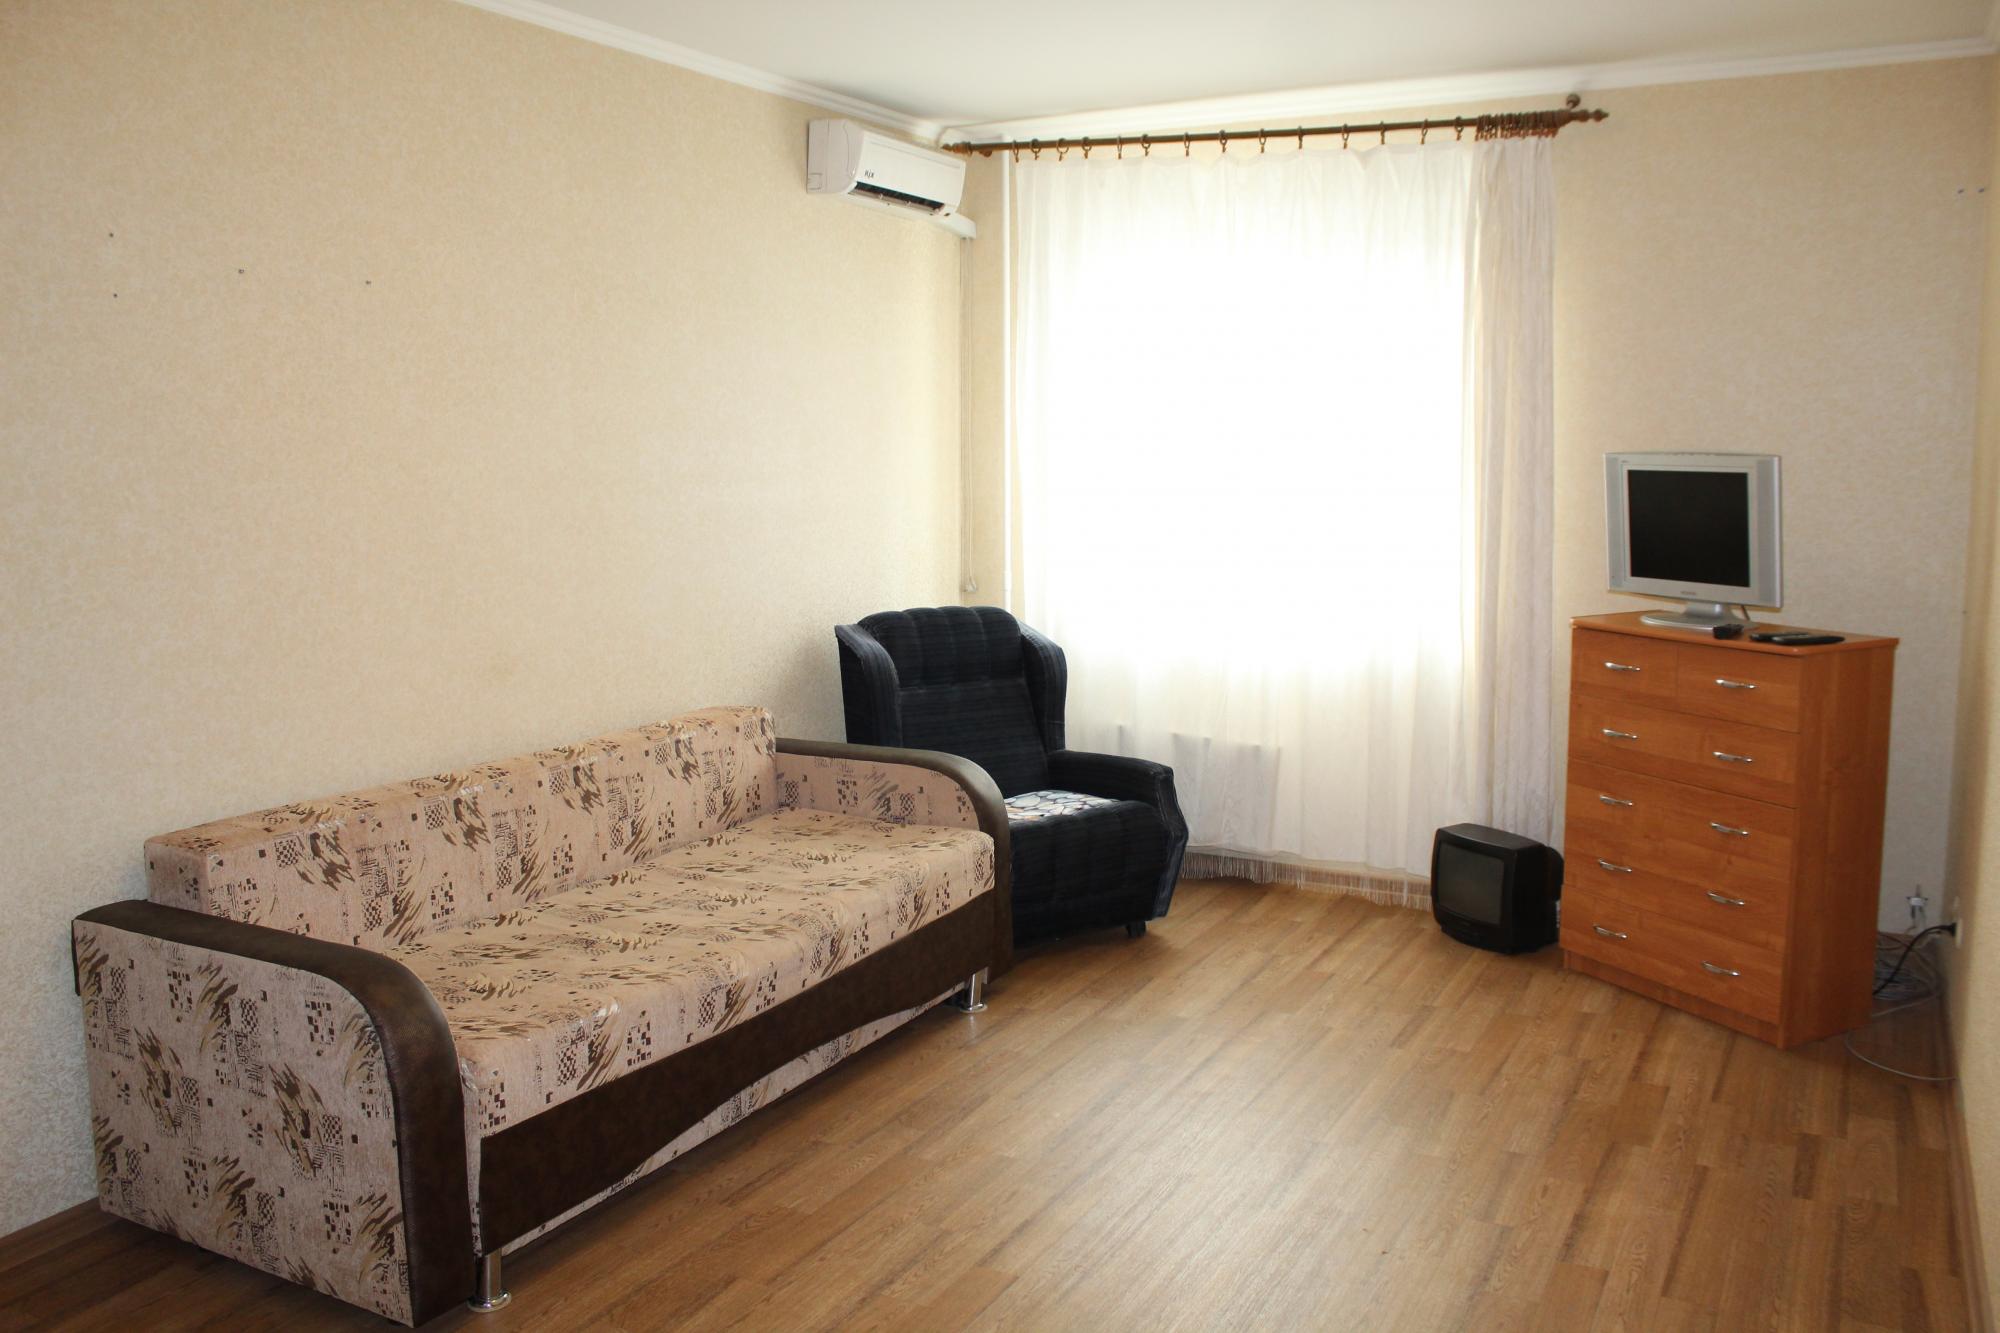 Сниму 1 комнатную квартиру без мебели и без посредников